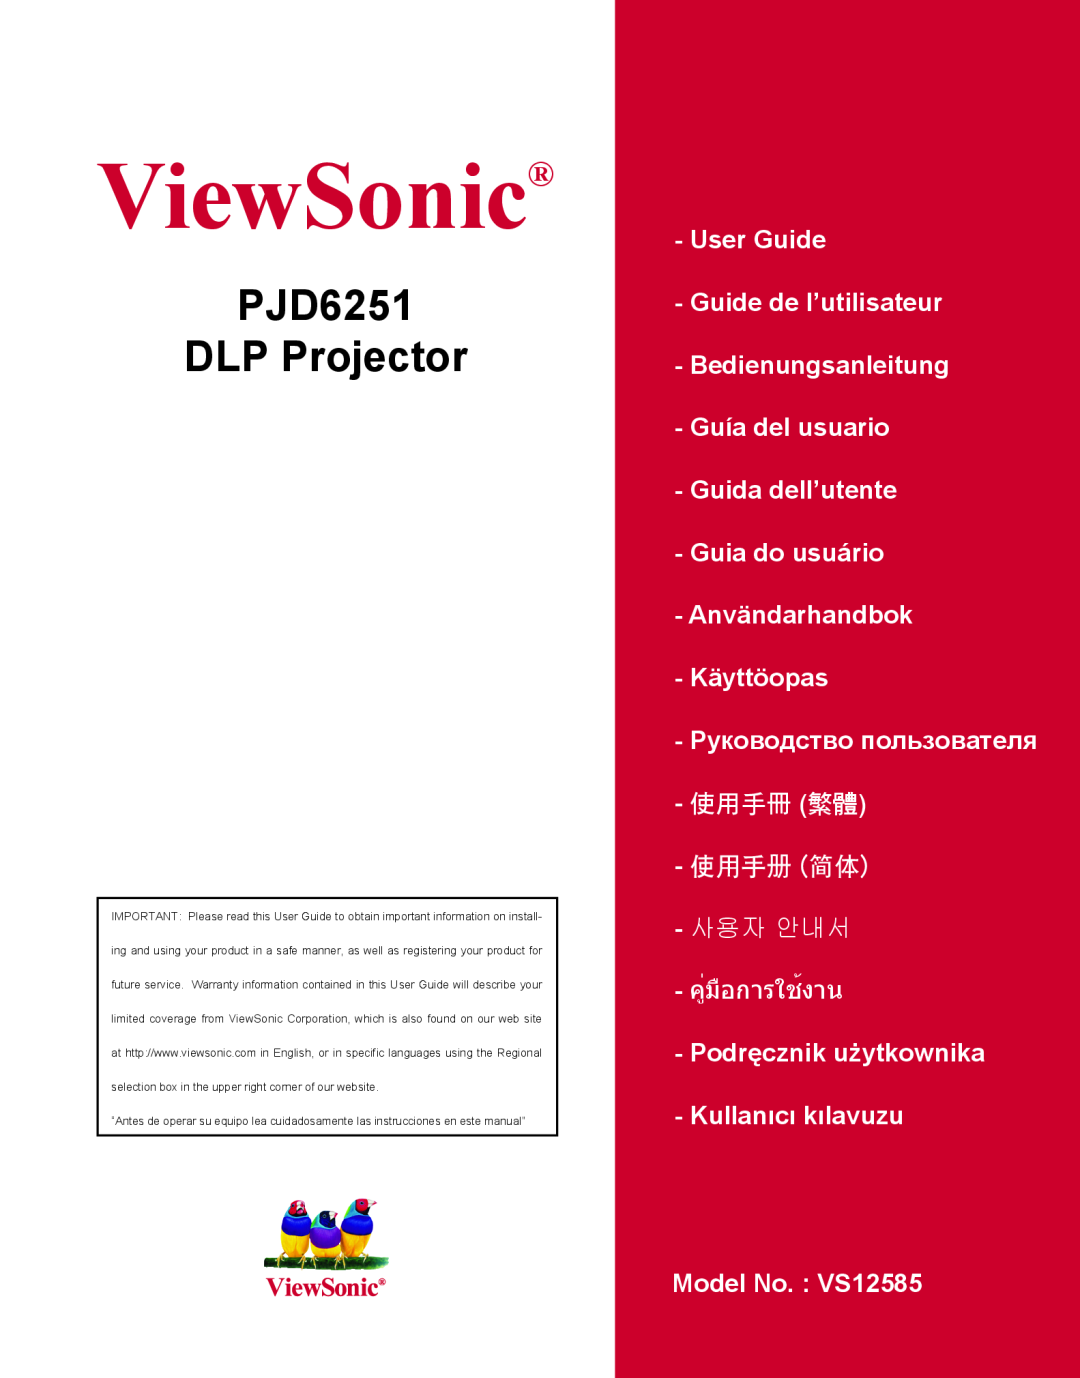 ViewSonic warranty PJD6251 DLP Projector, ViewSonic, User Guide Guide de l’utilisateur Bedienungsanleitung, 사용자 안내서 